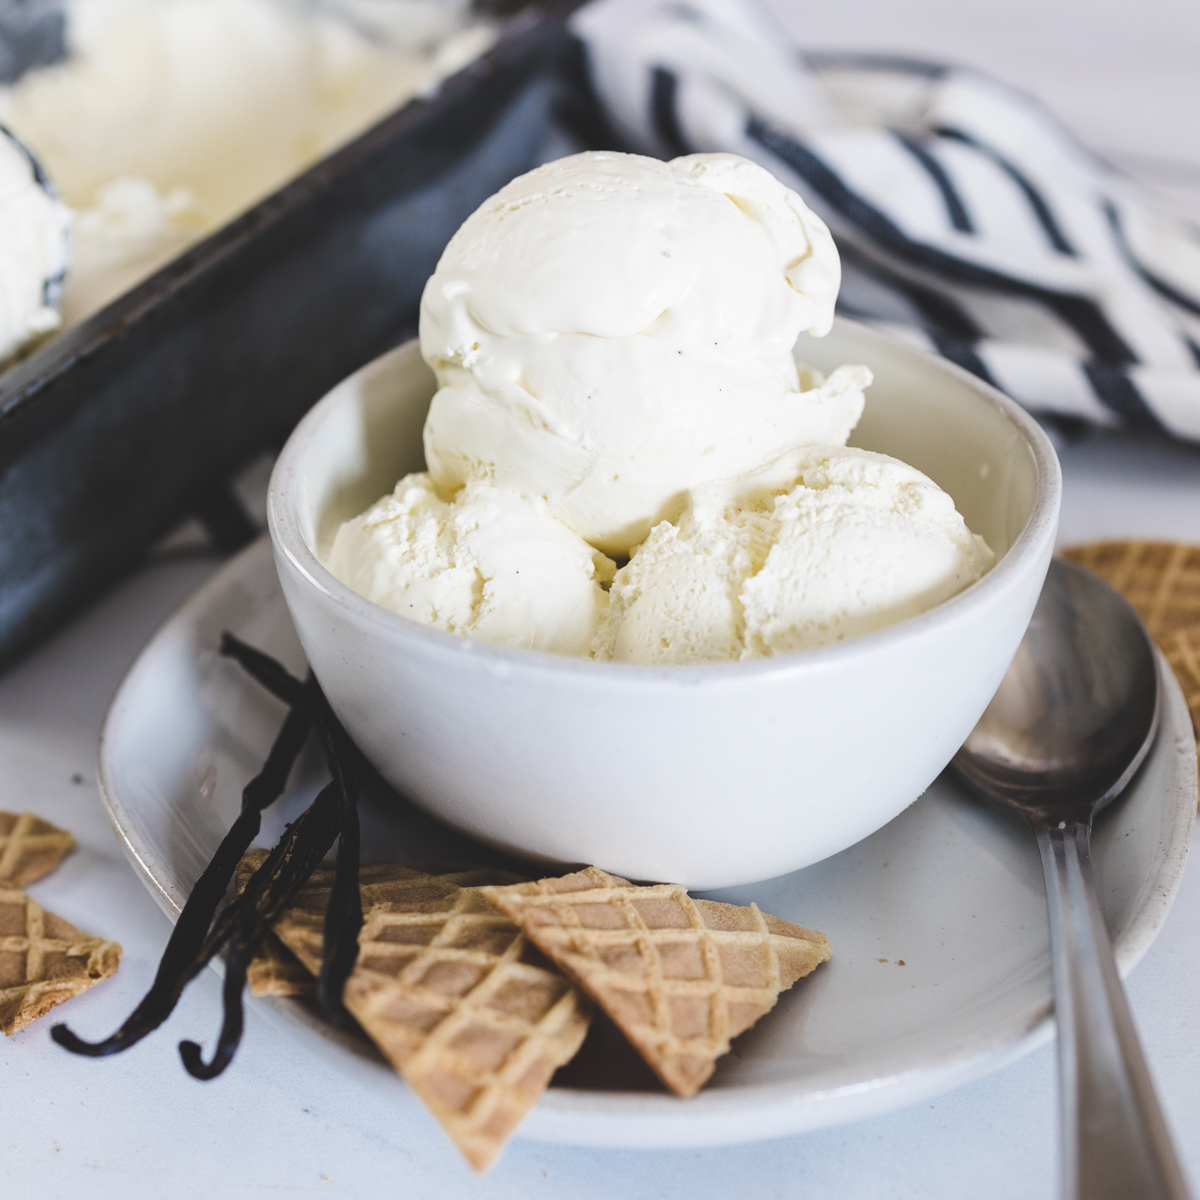 KitchenAid Ice Cream Recipes - SueBee Homemaker